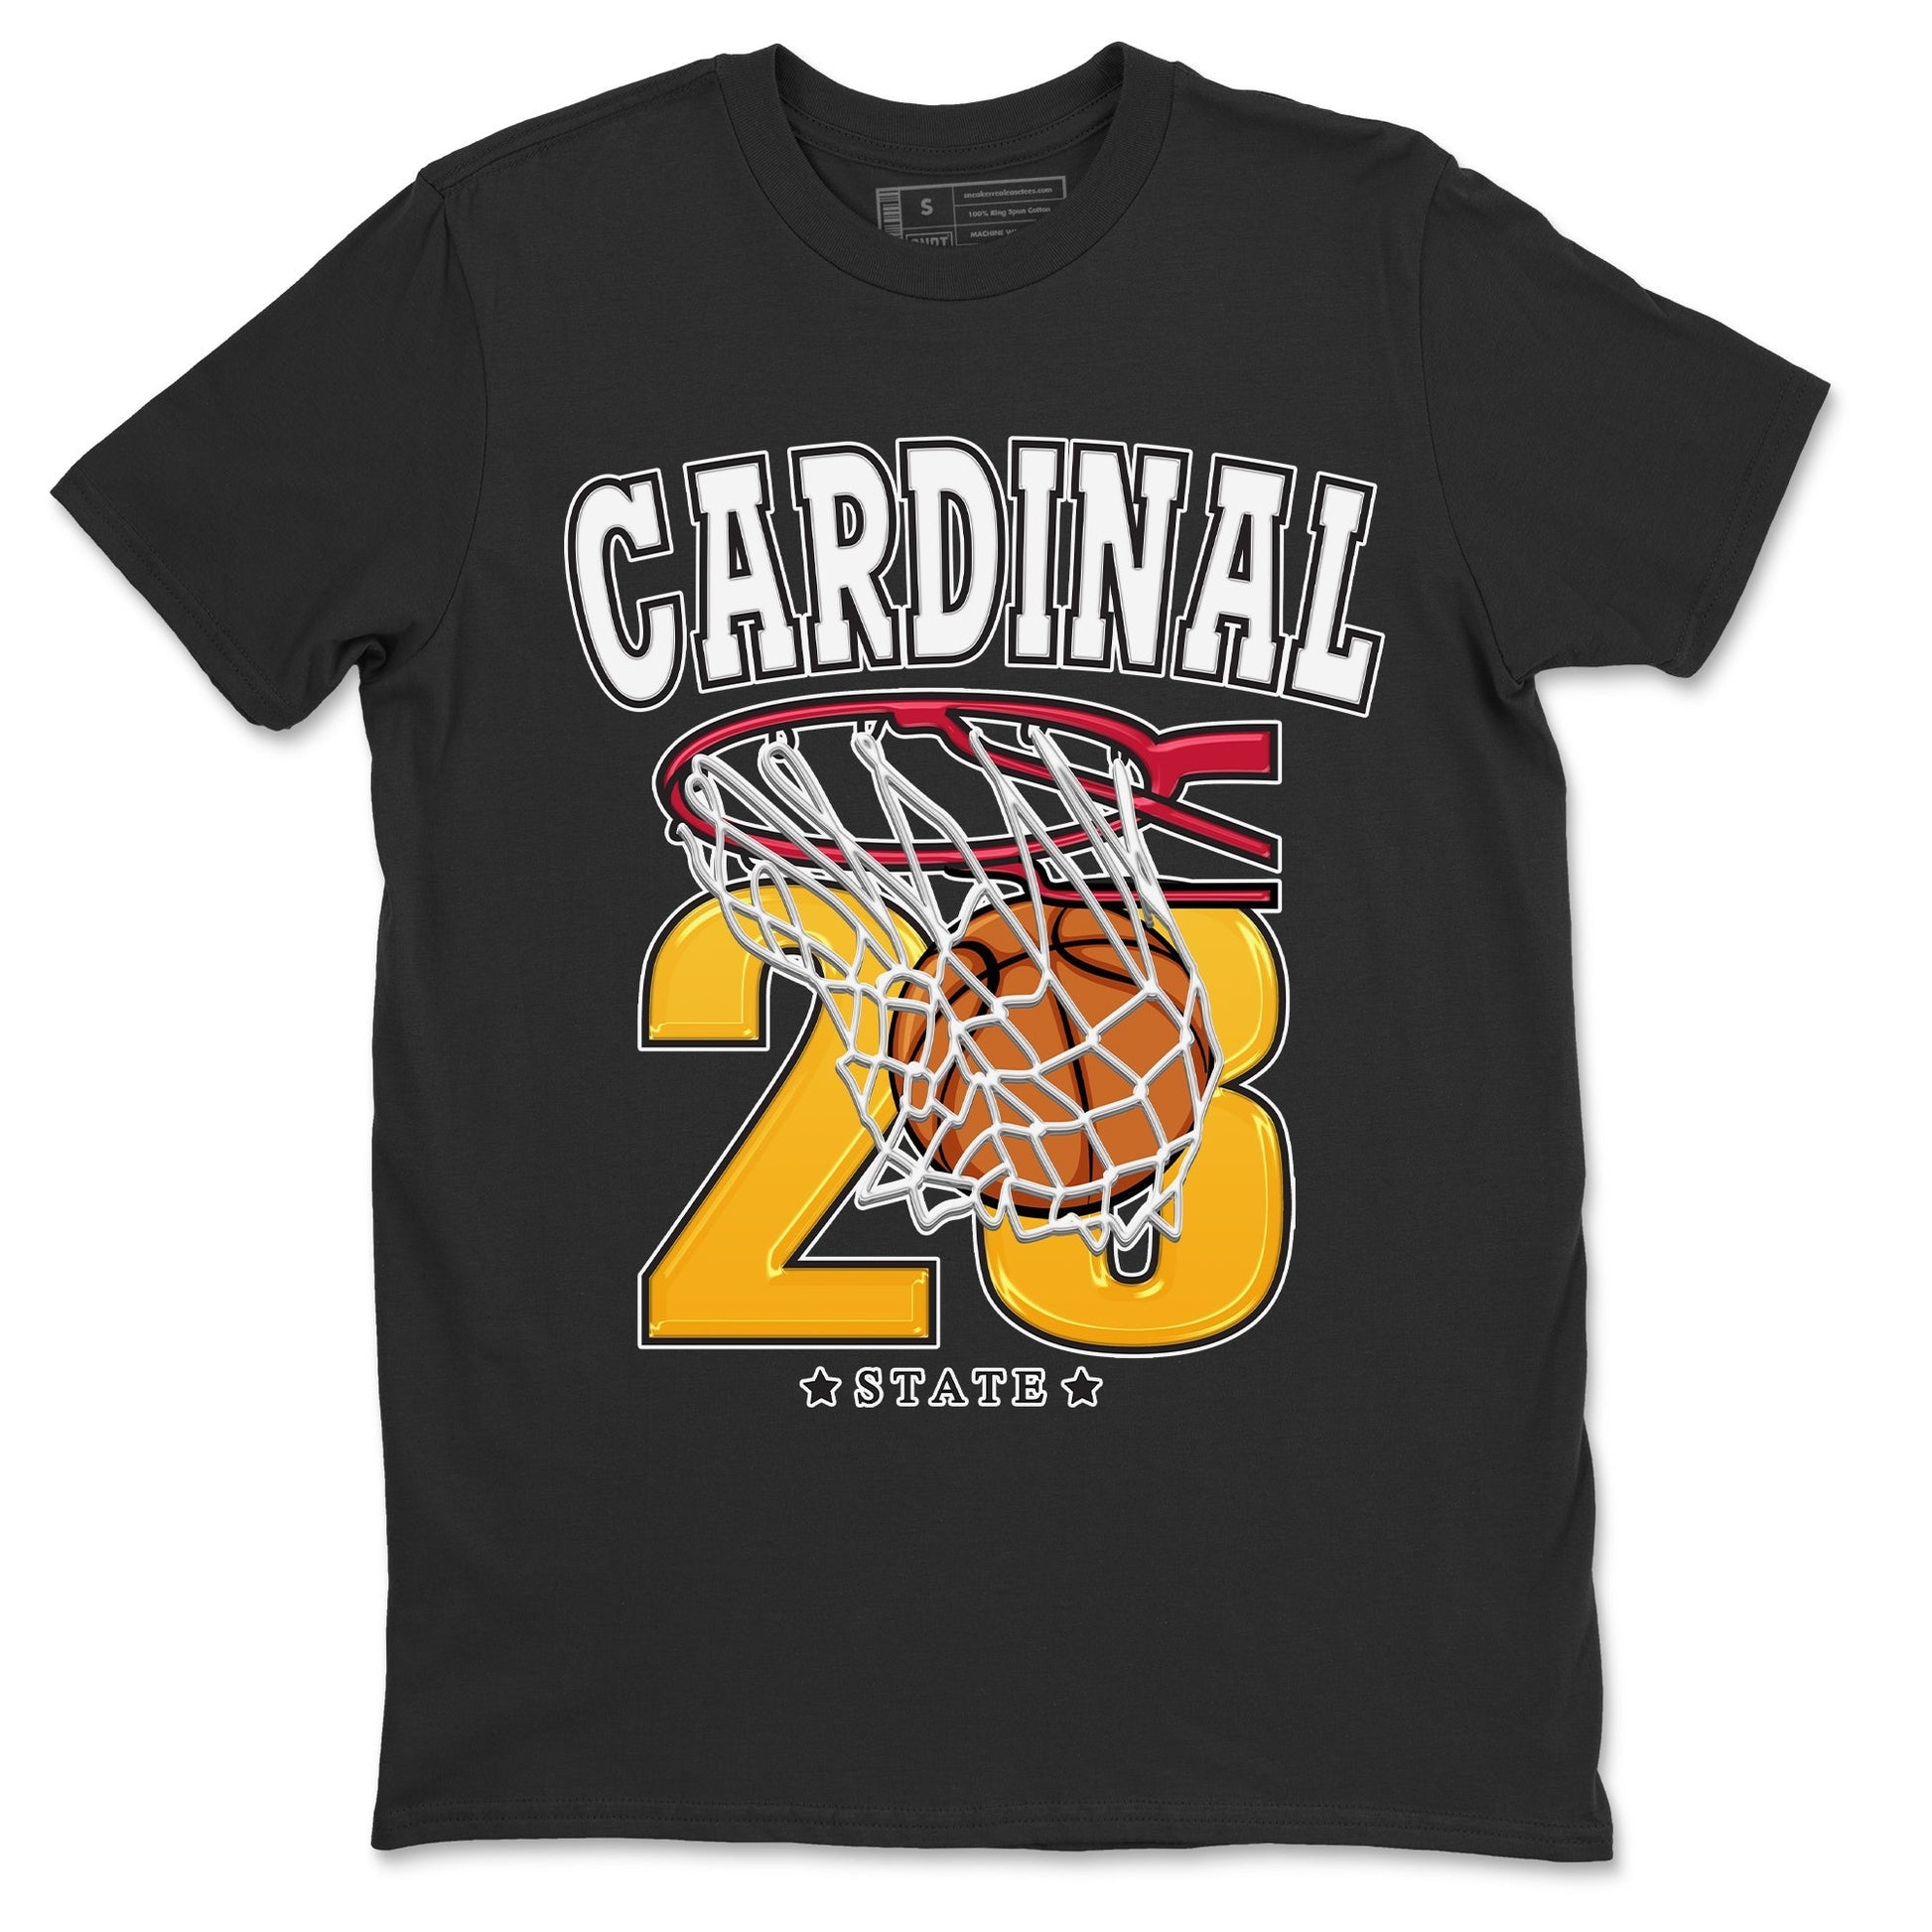 Jordan 7 Cardinal Sneaker Match Tees Basketball Sneaker Tees Jordan 7 Cardinal Sneaker Release Tees Unisex Shirts